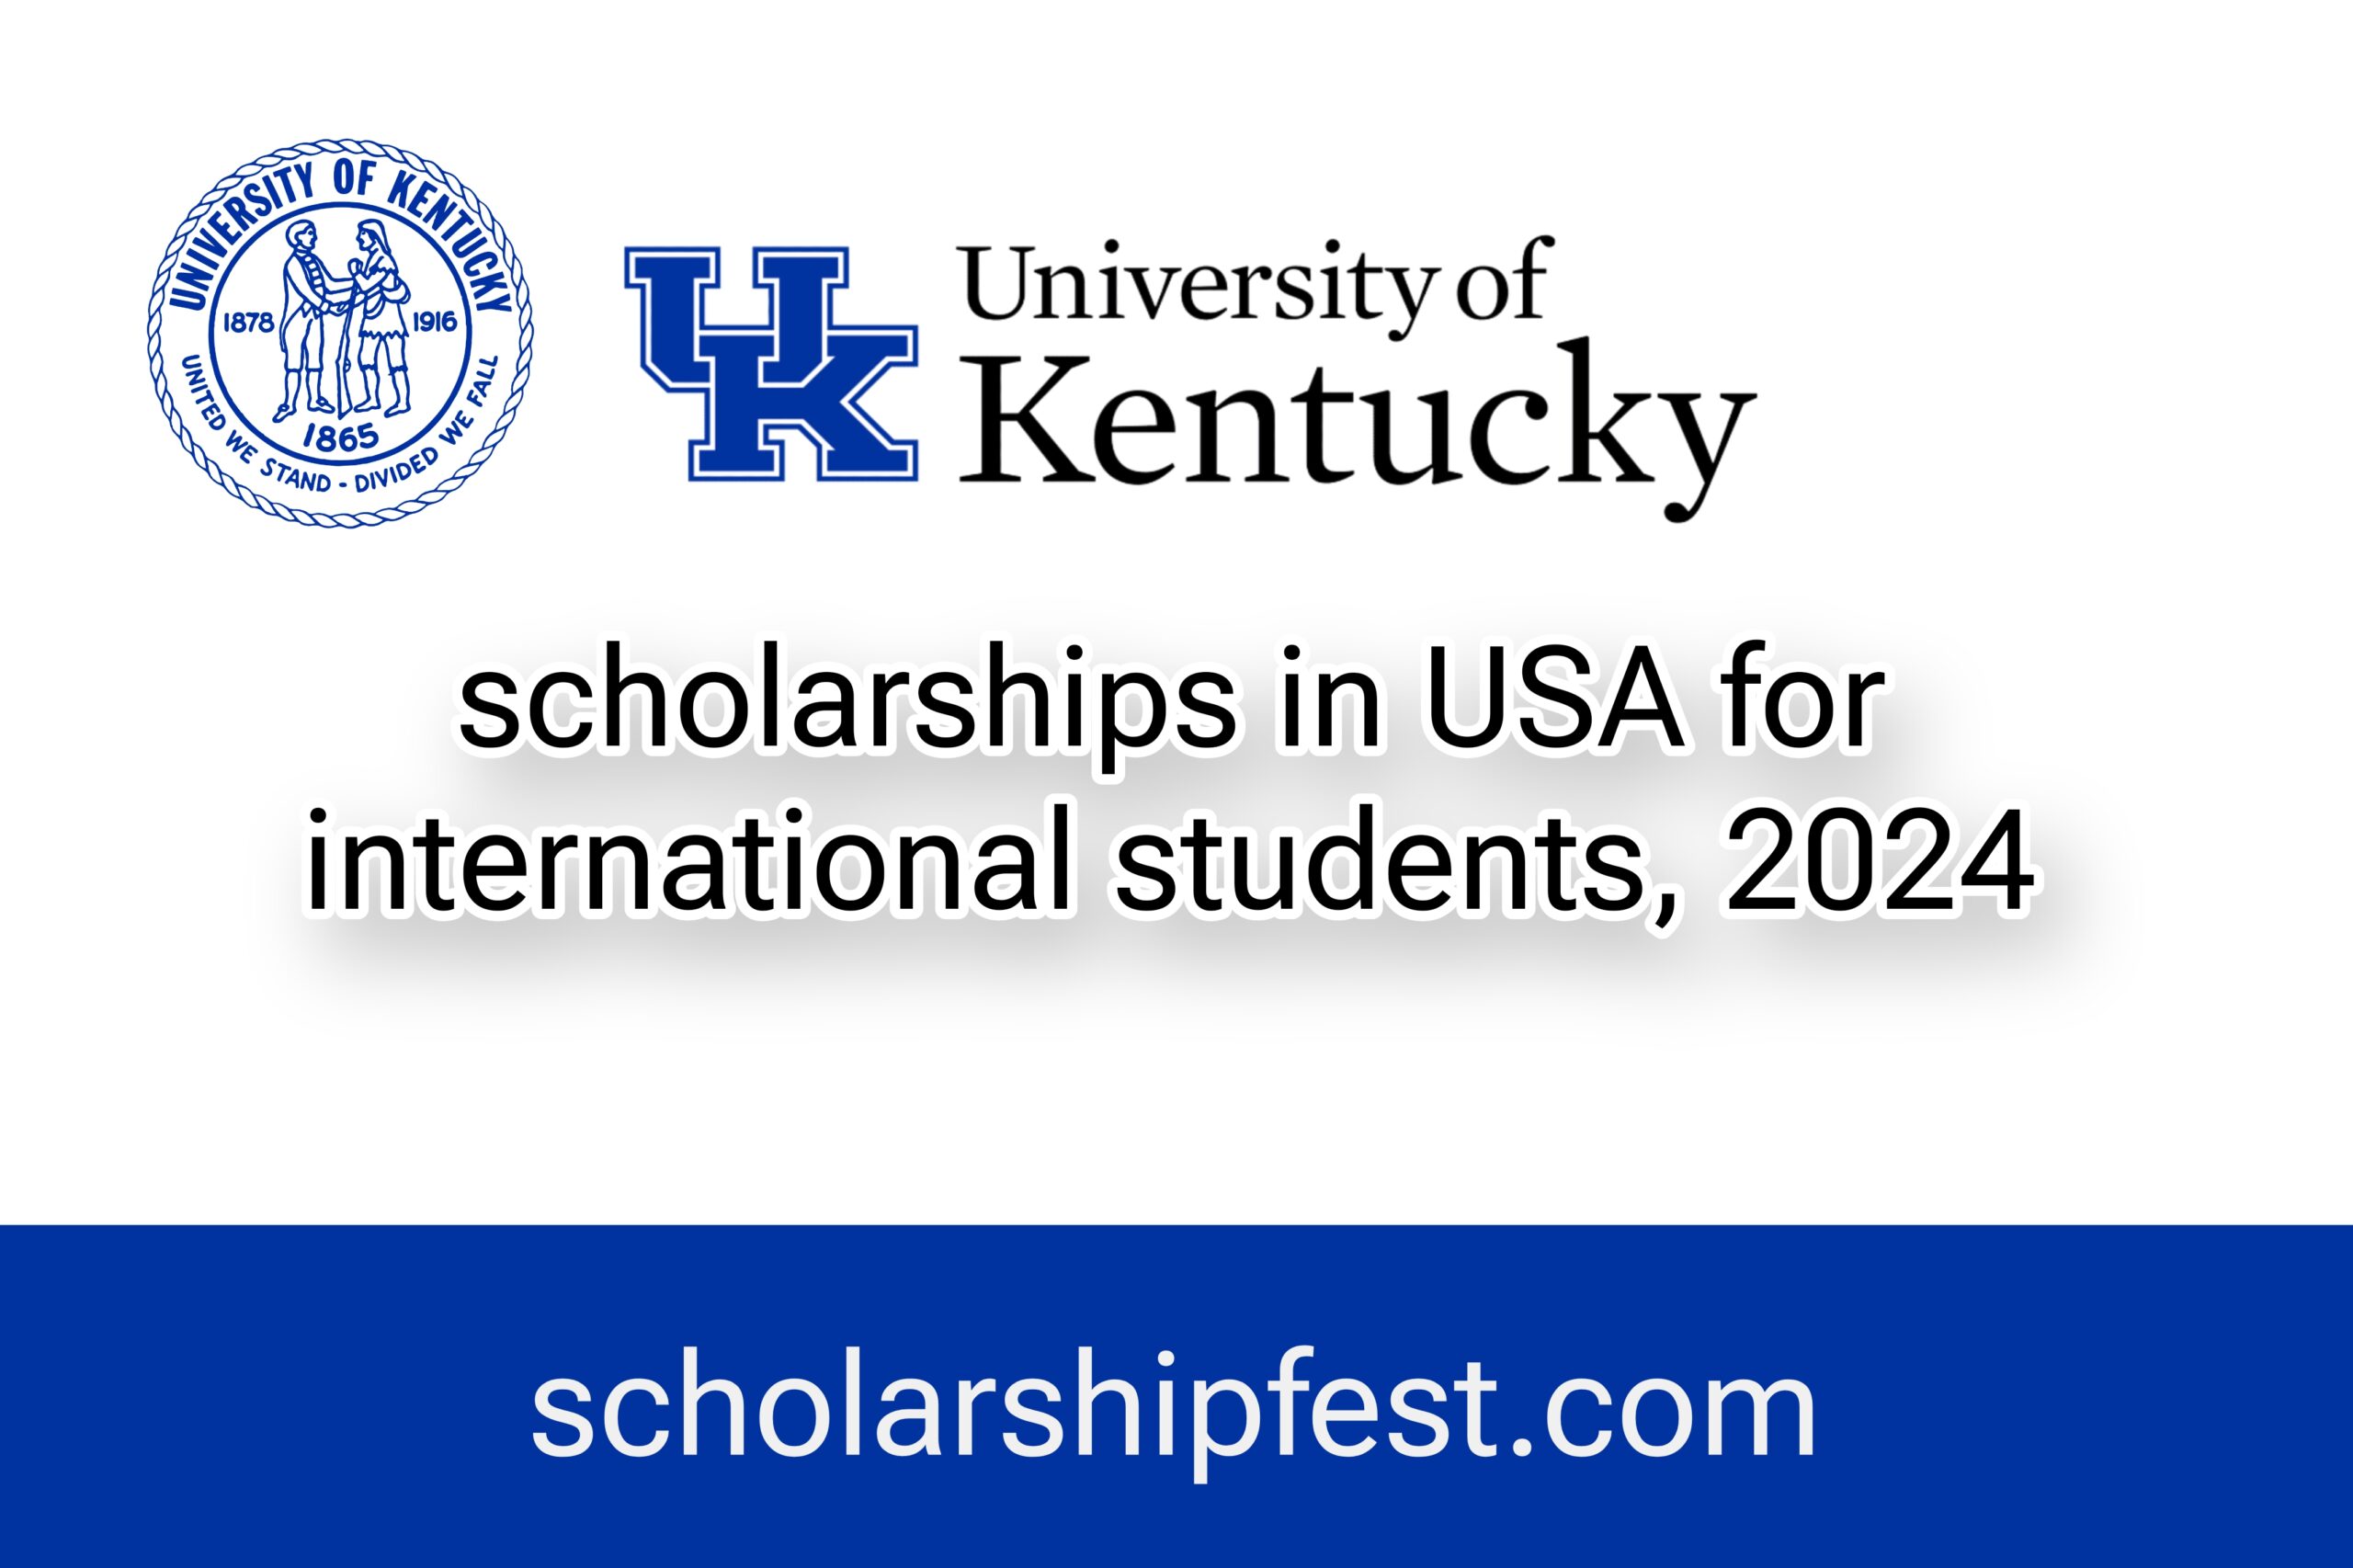 university of kentucky scholarships in usa for international students